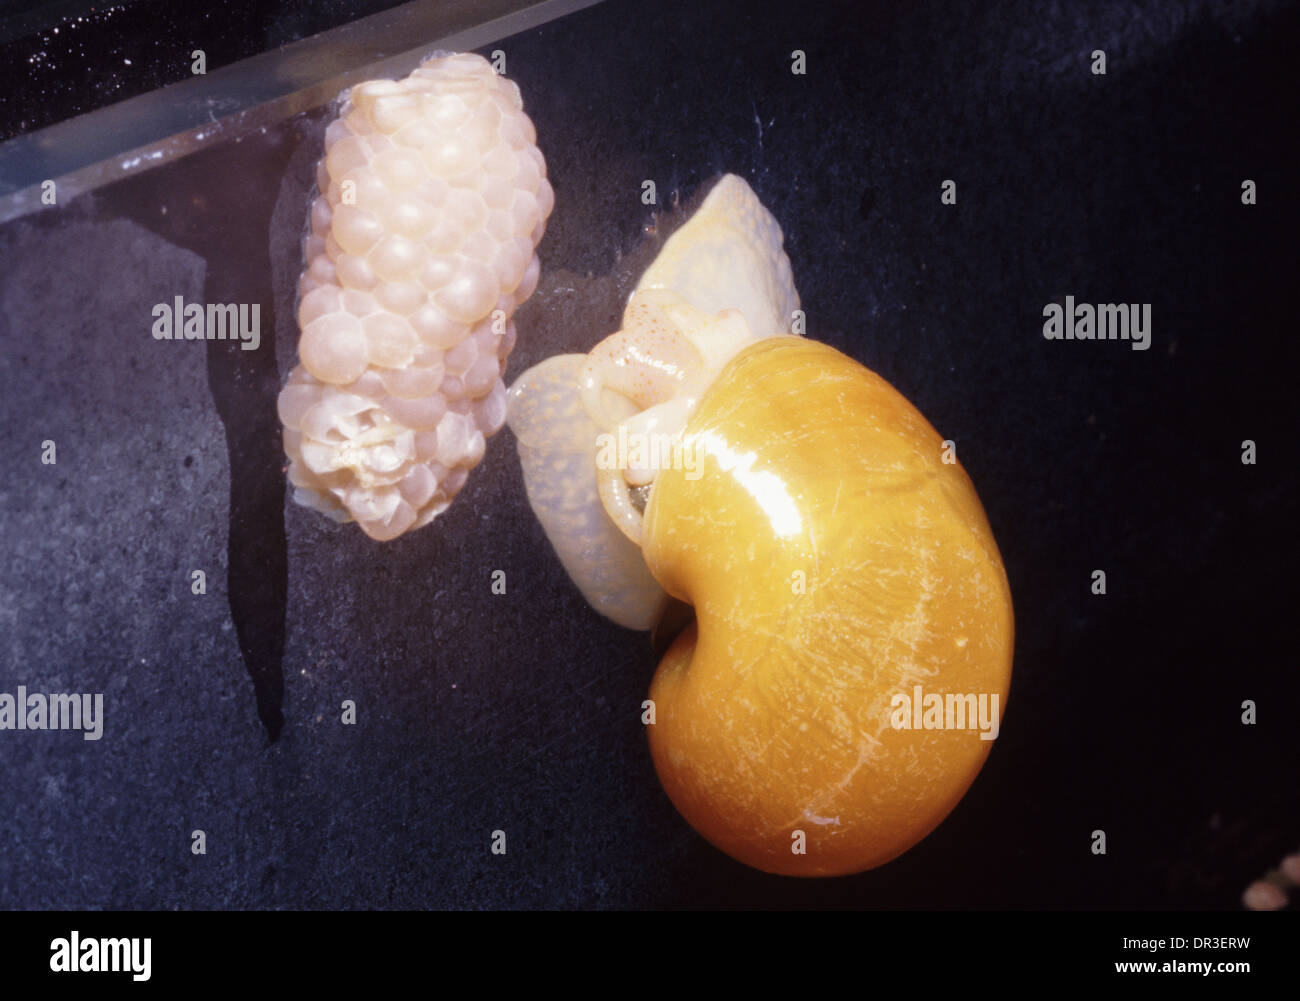 Lemon Apple snail (Pomacea bridgesi) with eggs Stock Photo